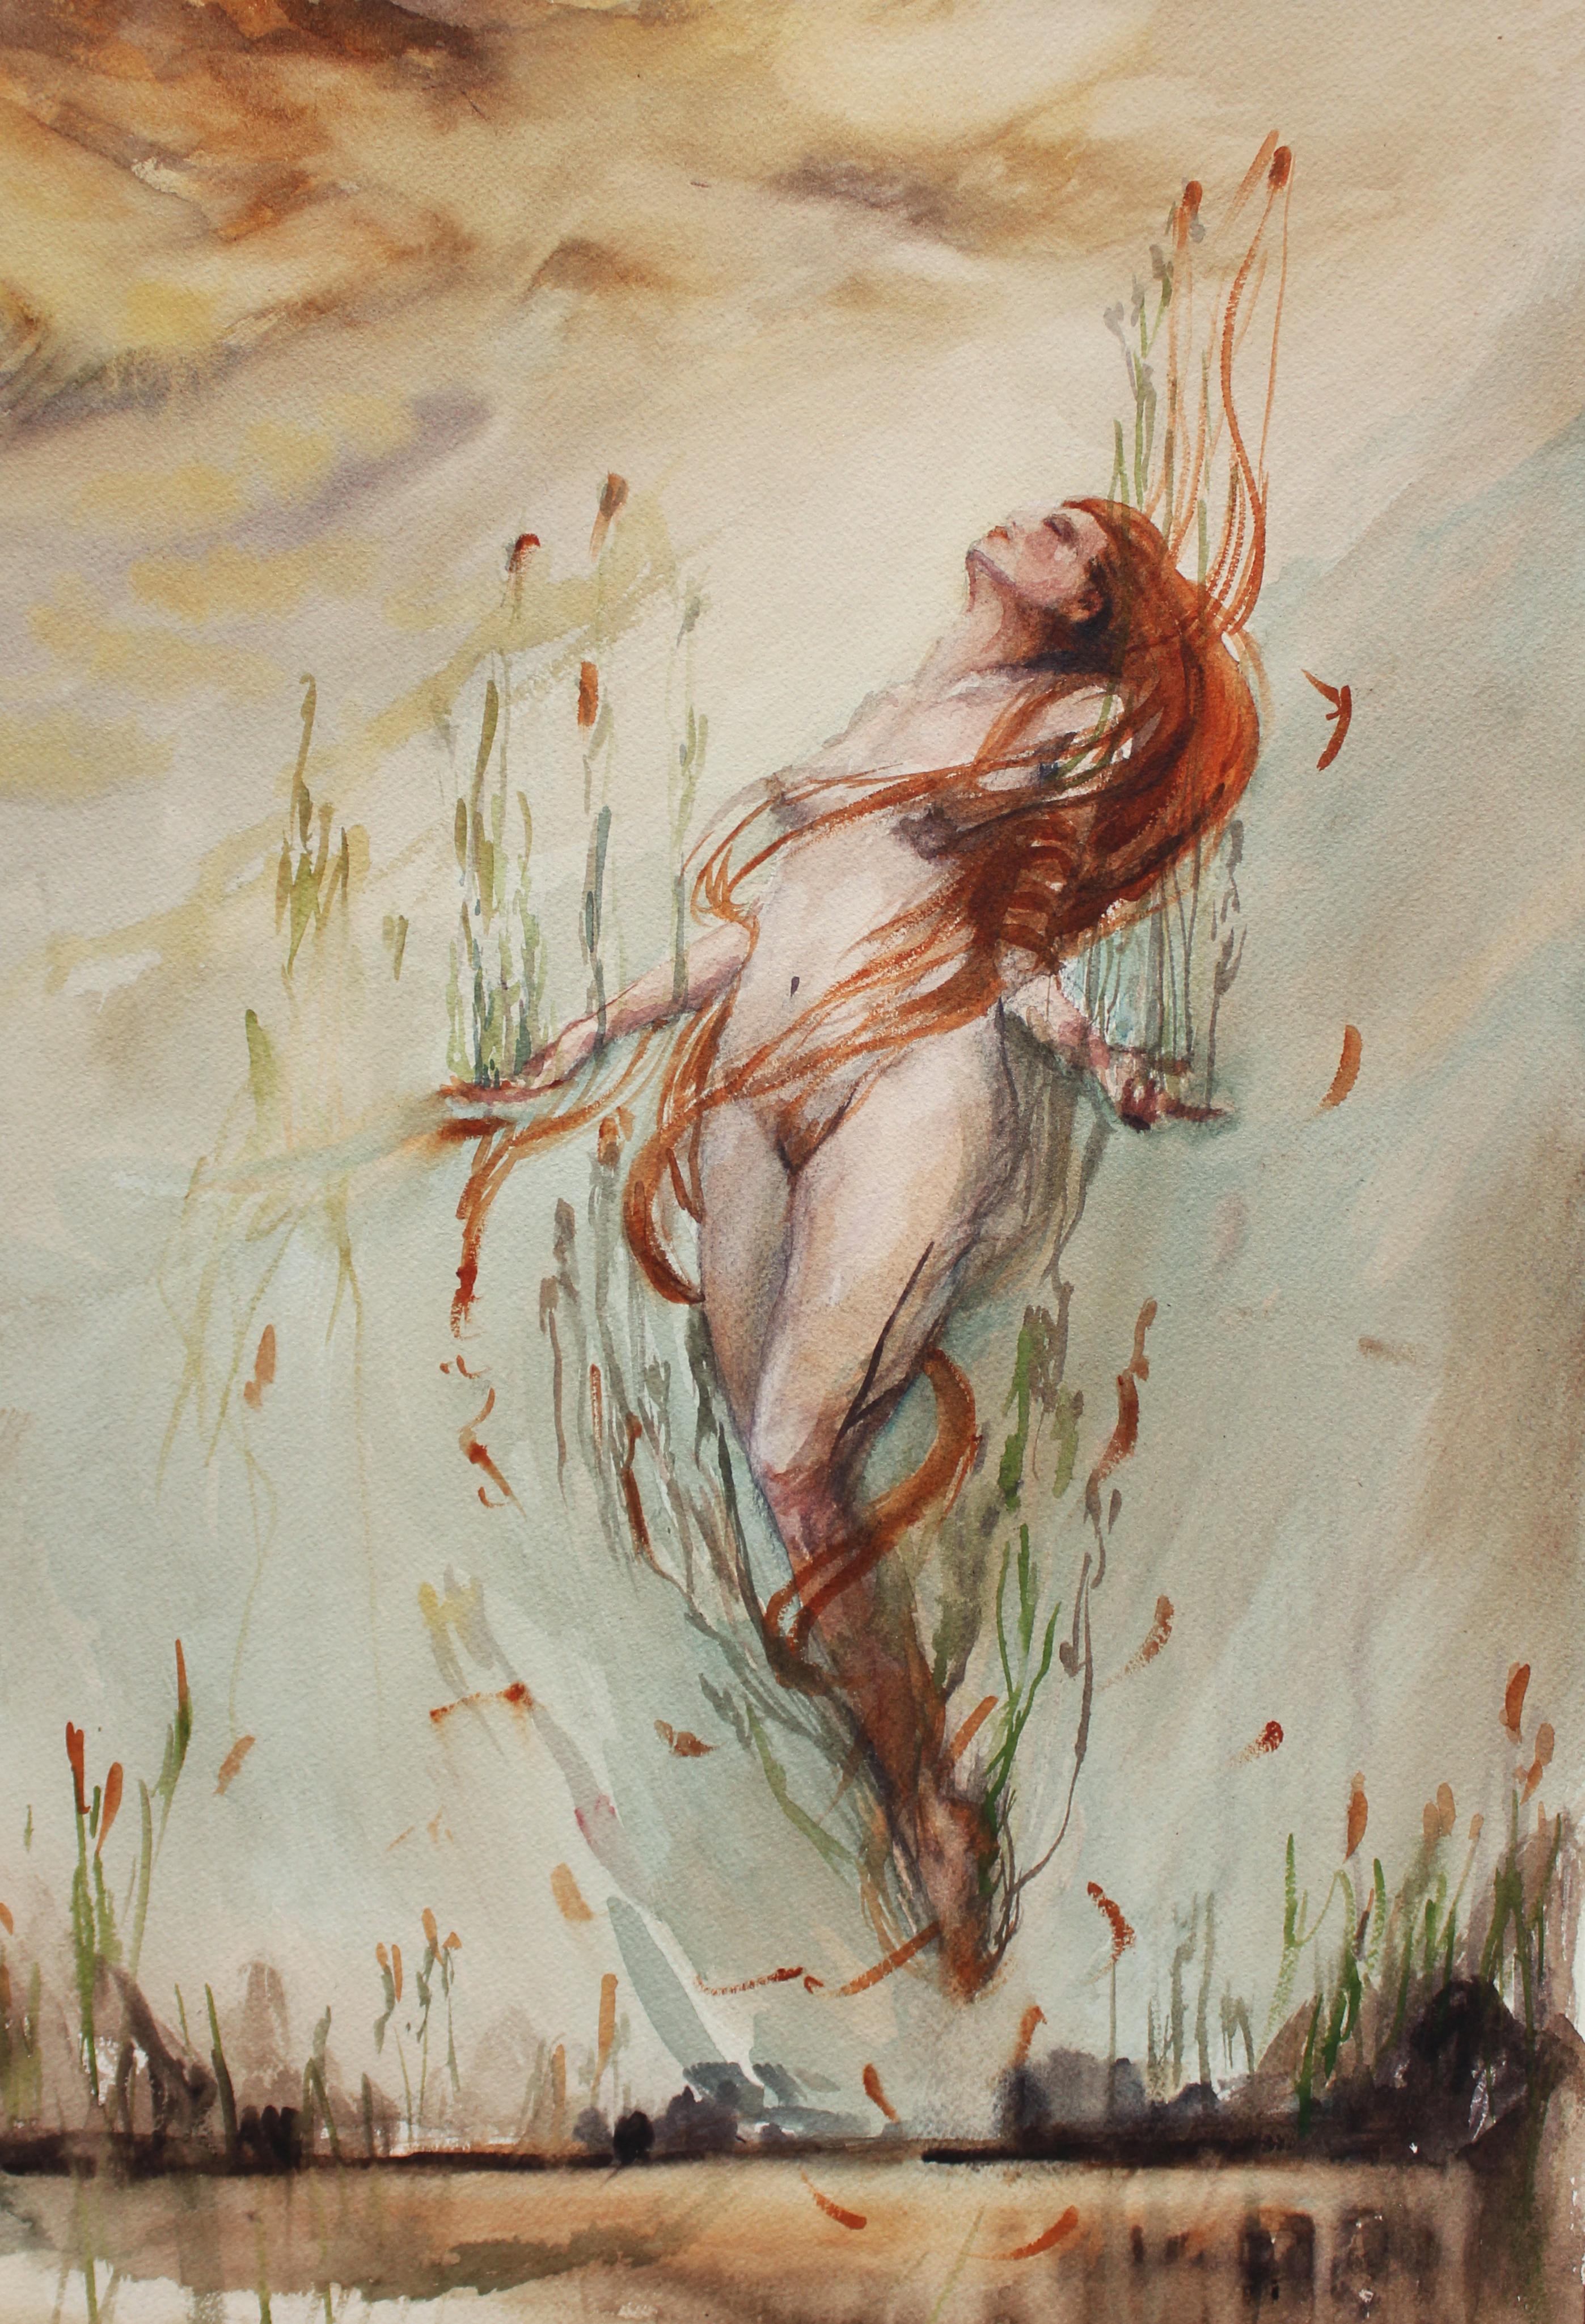 Michele Bajona Nude - "Natura" Watercolor Painting